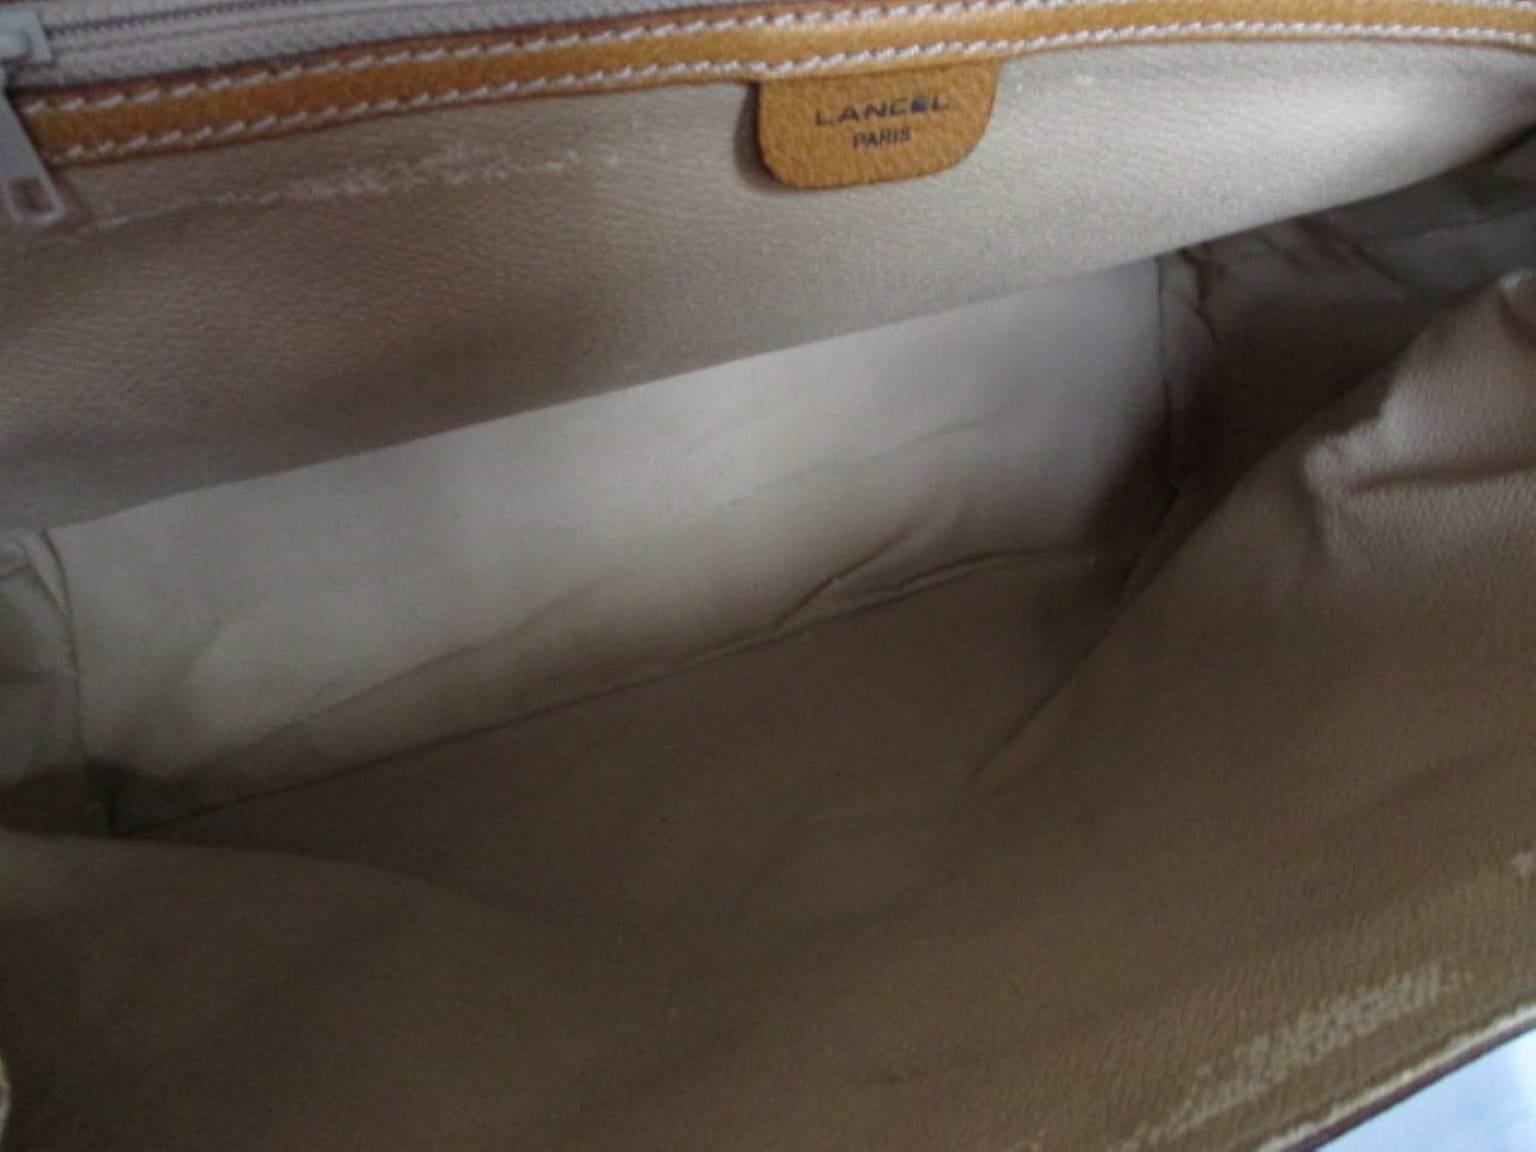 Lancel Paris Leather Travel Weekend Bag For Sale 2